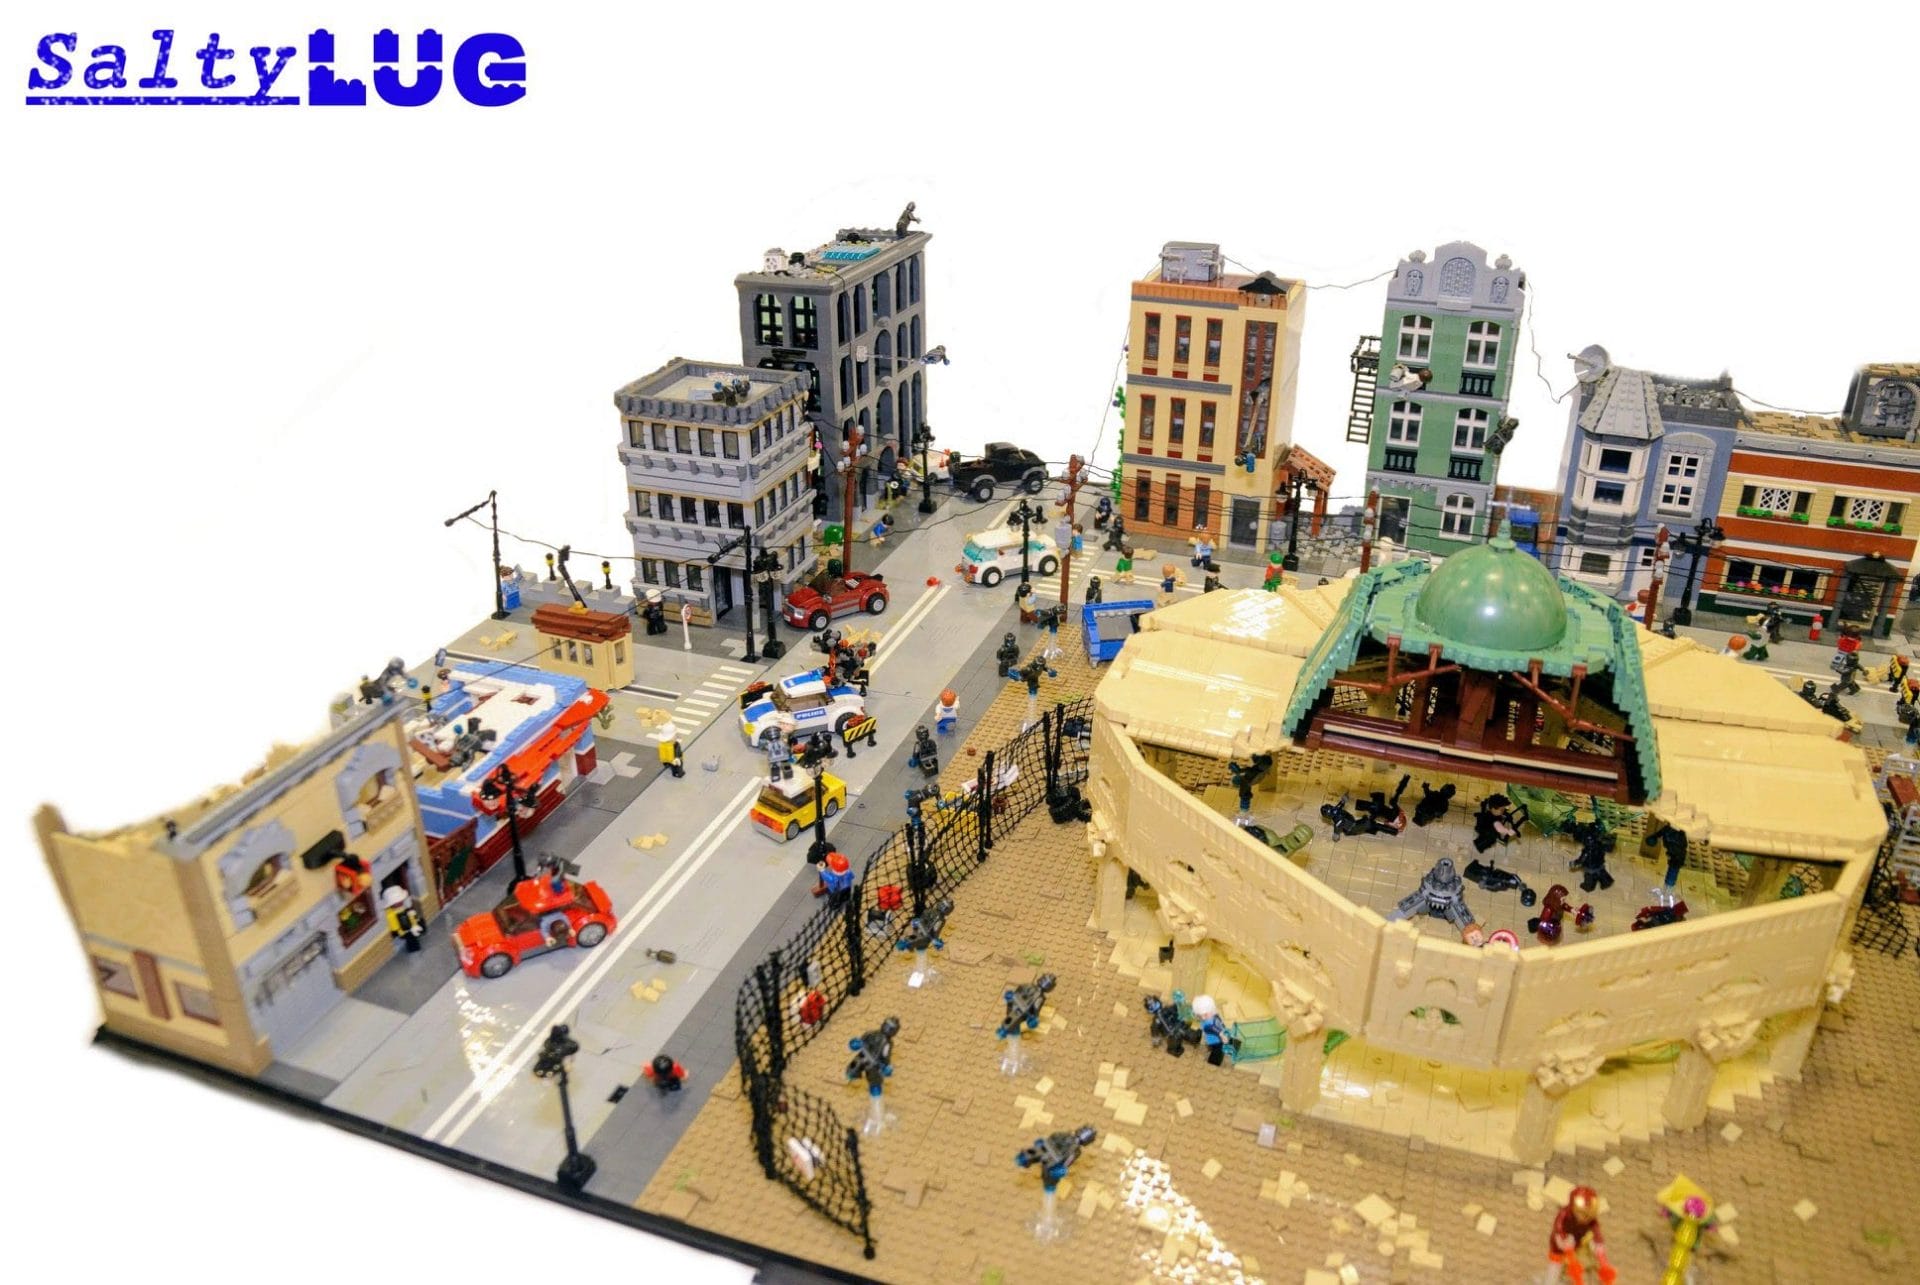 The Battle of Sokovia rebuilt LEGO brick by brick